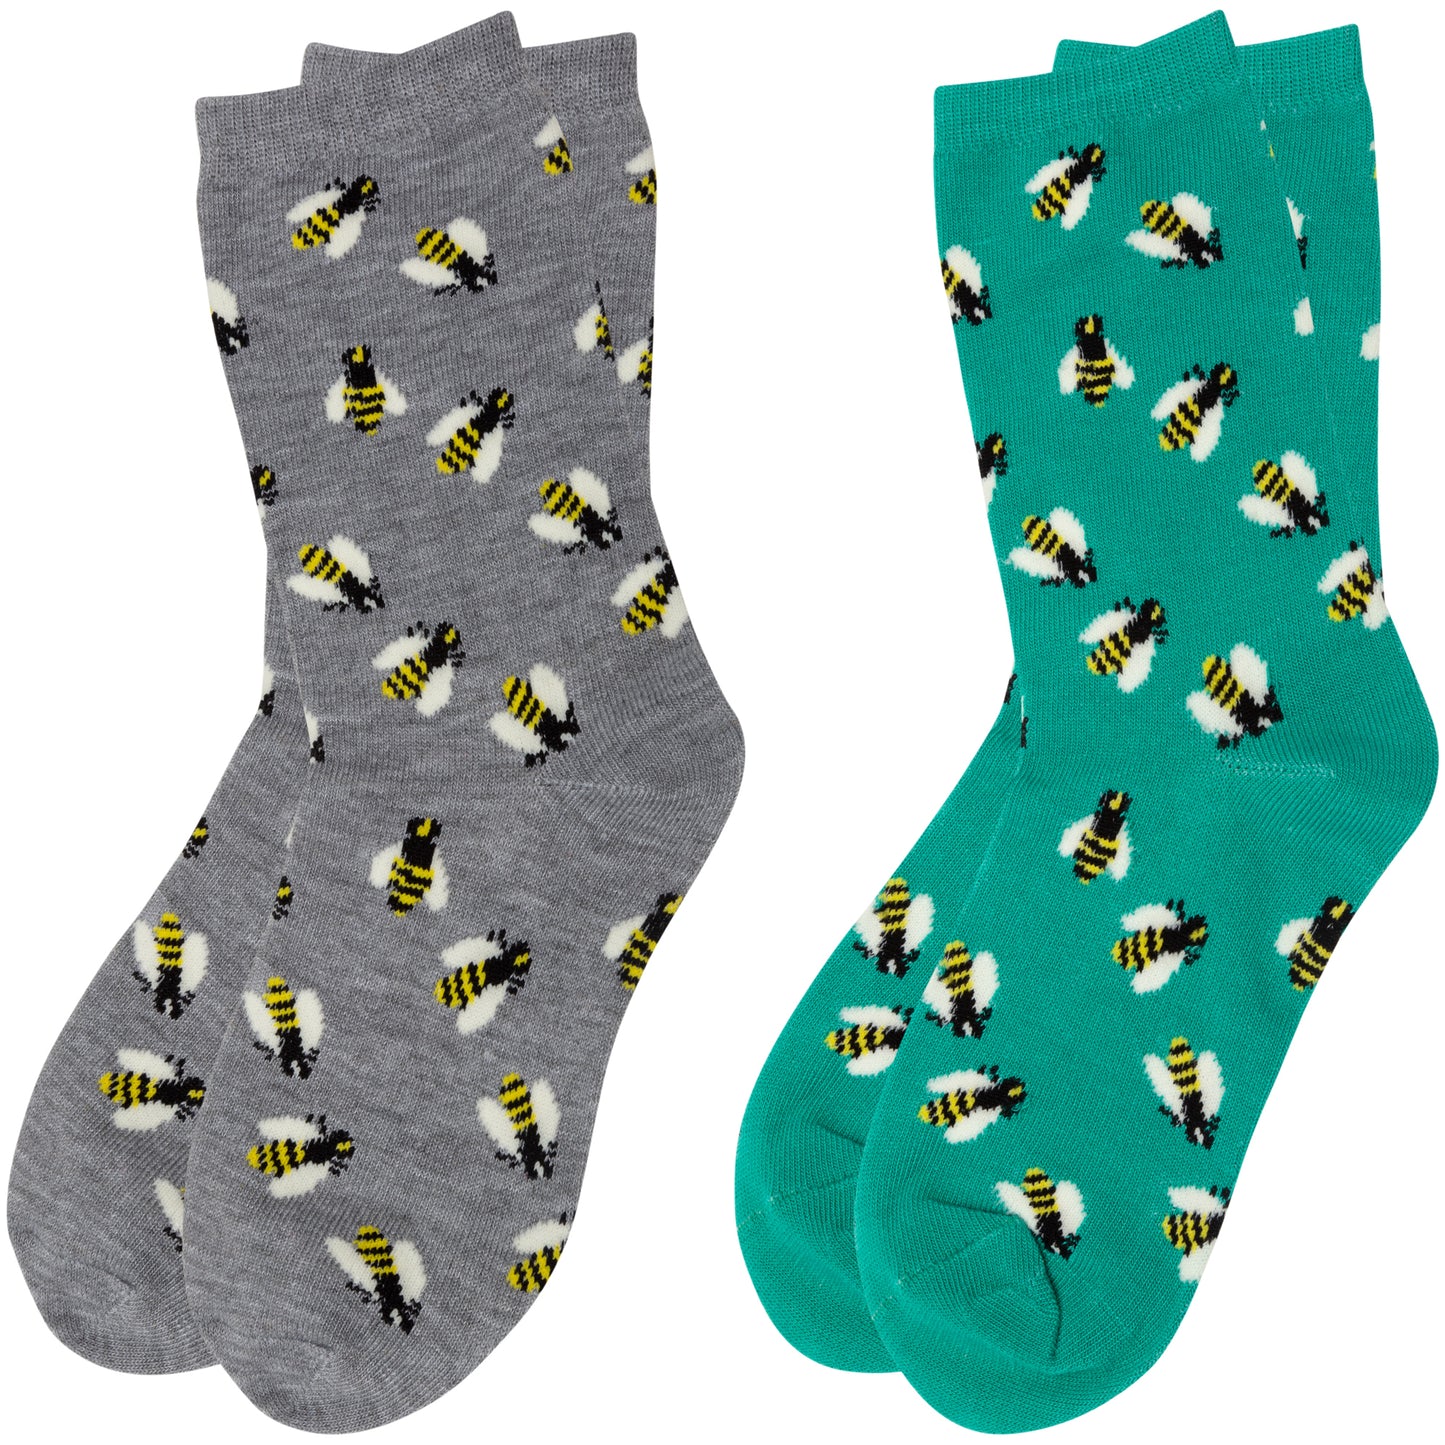 Buzzing Around Socks